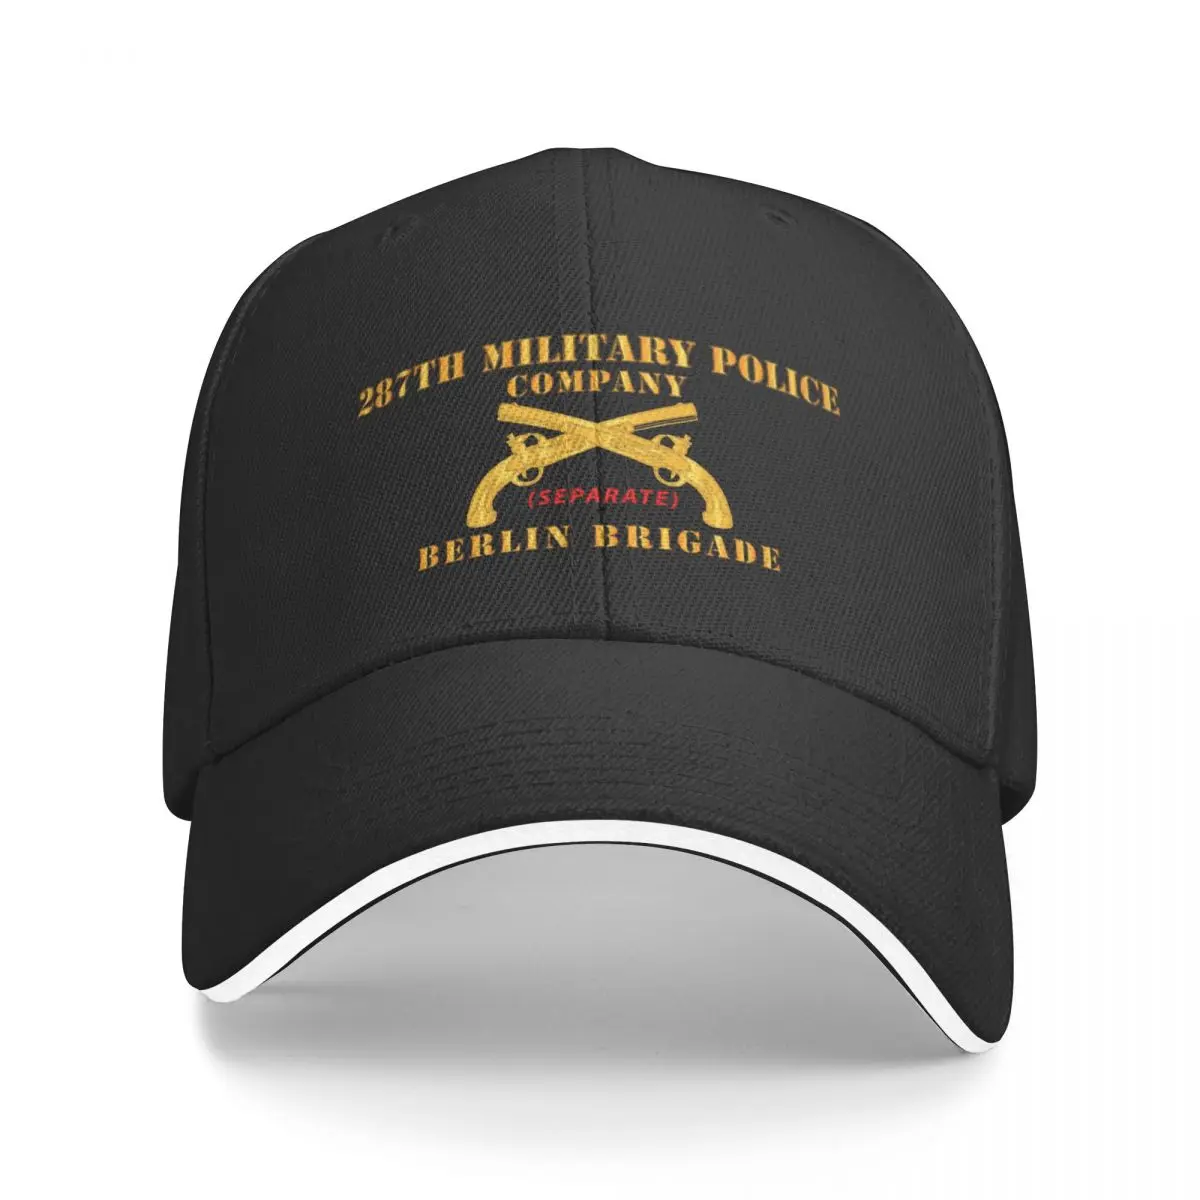 

New Army - 287th Military Police Company - Berlin Bde - Hat Baseball Cap Sunscreen Sun Cap Woman Hats Men's